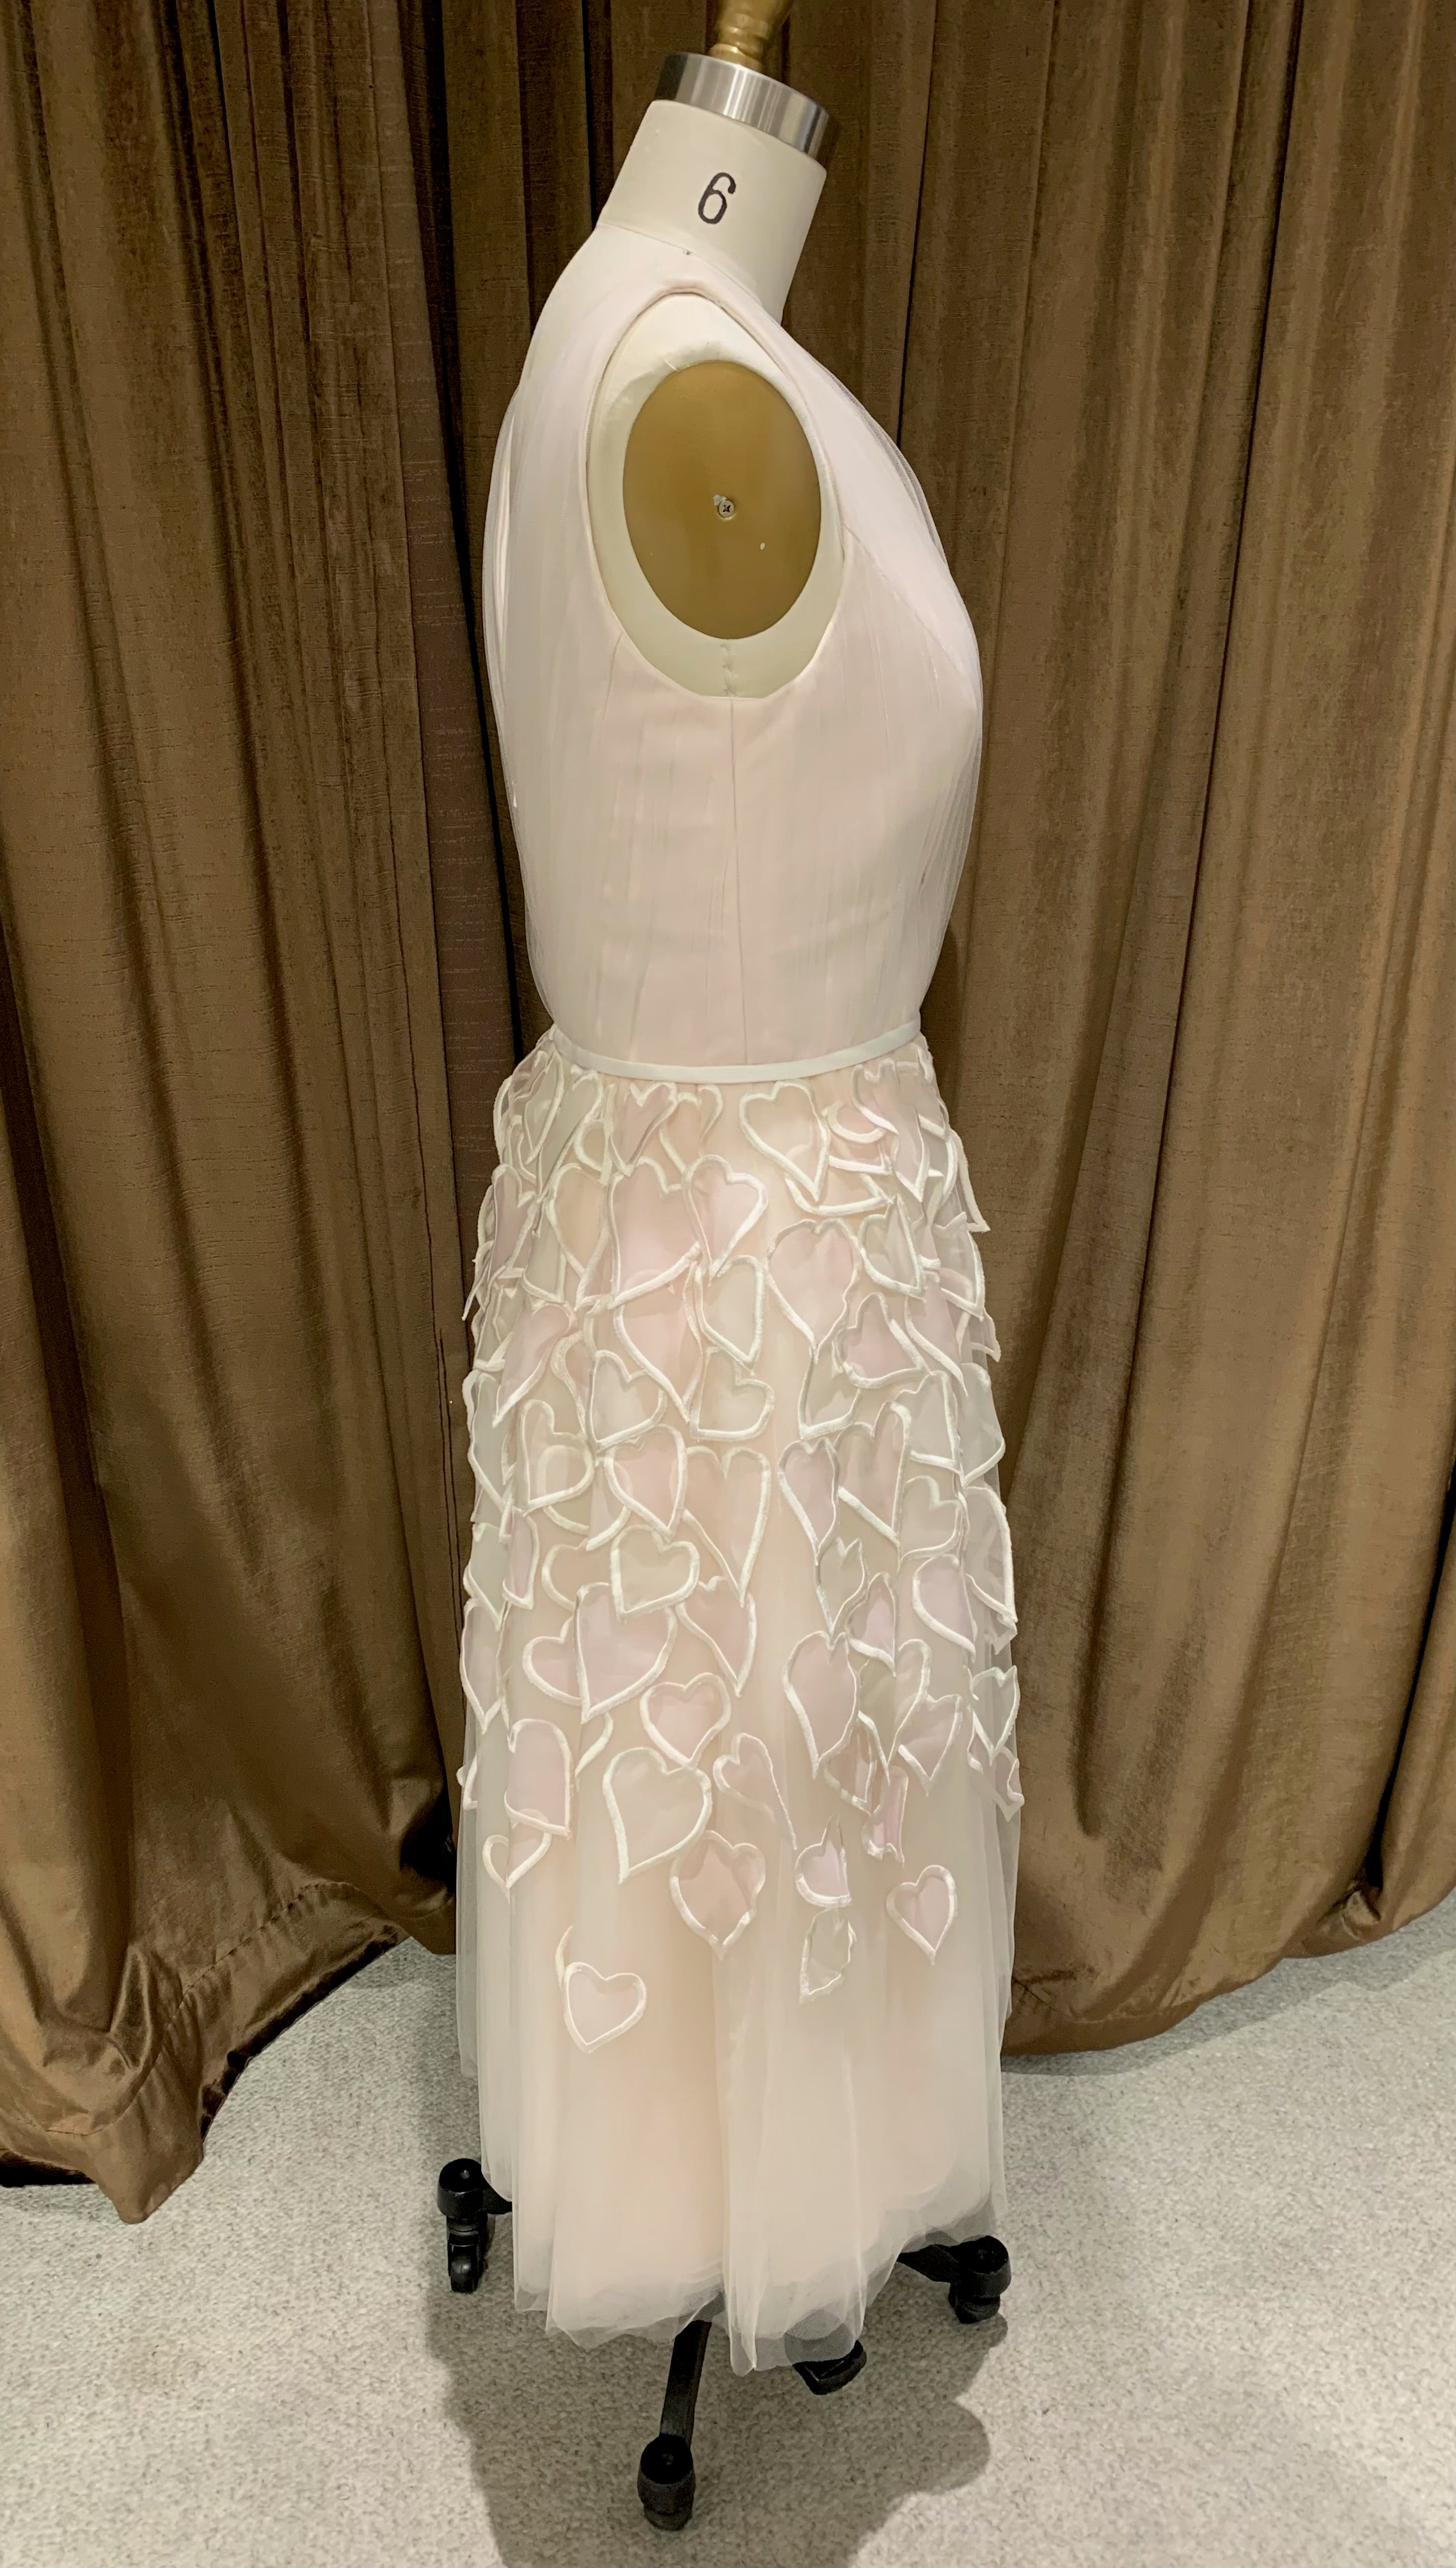 GC#35076 - Carolina Herrera Heidi Wedding Dress in Size 8